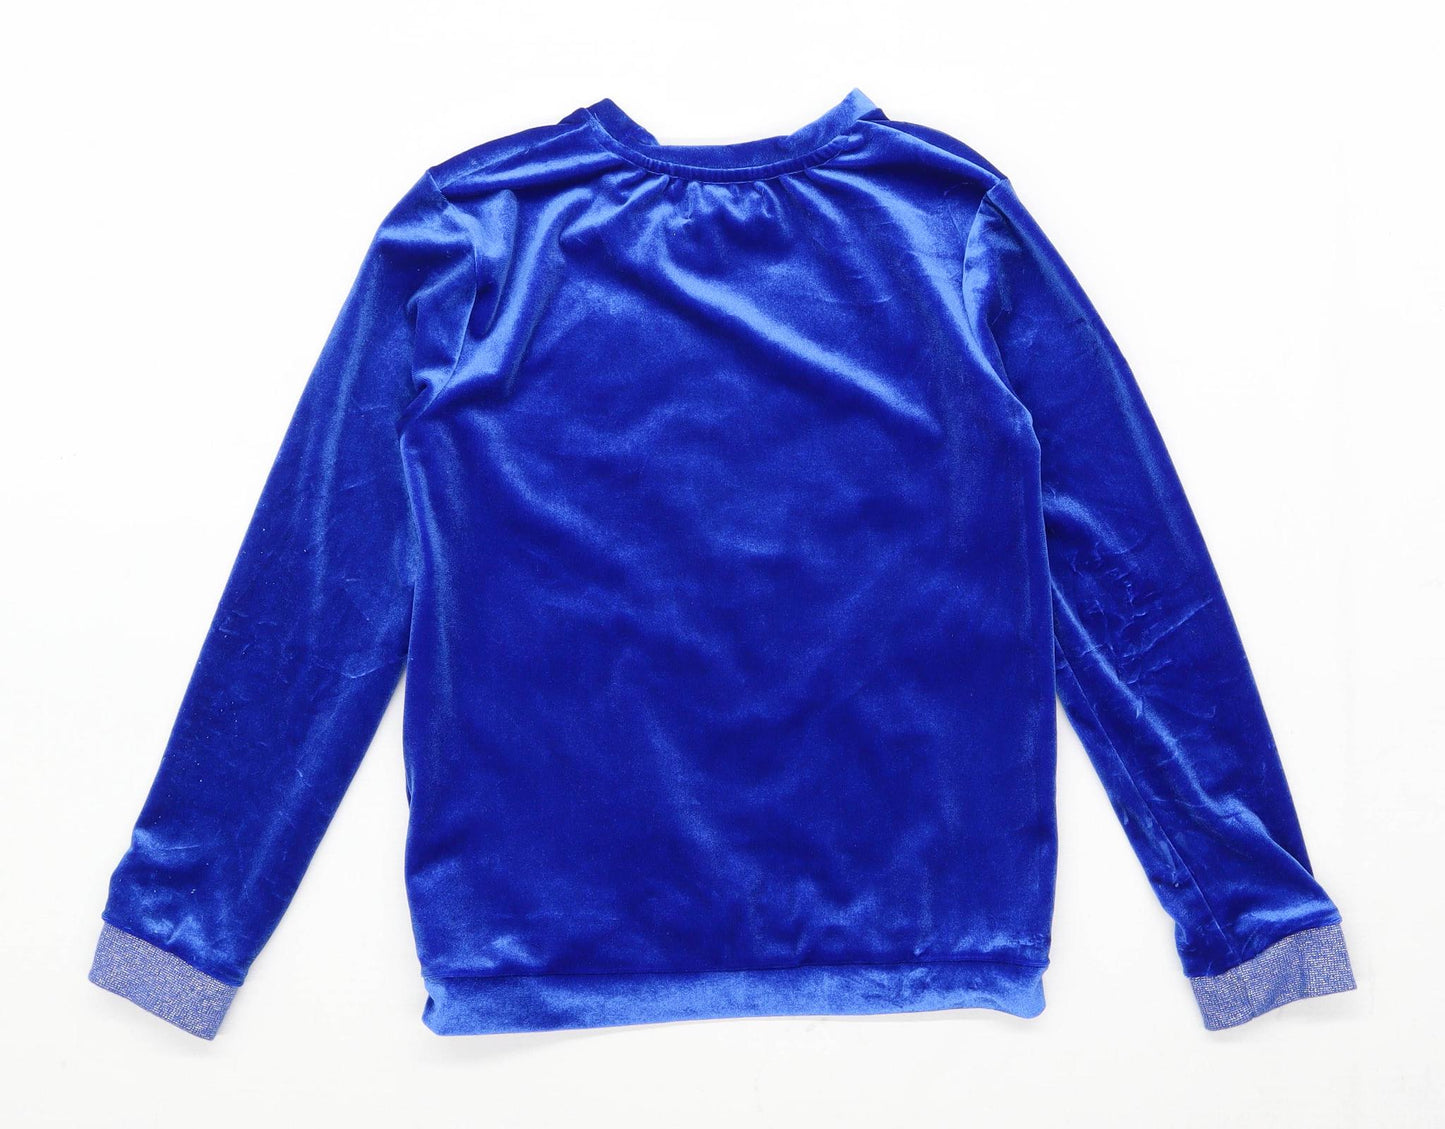 M&Co Girls Graphic Blue Dance Sweatshirt Age 8-9 Years